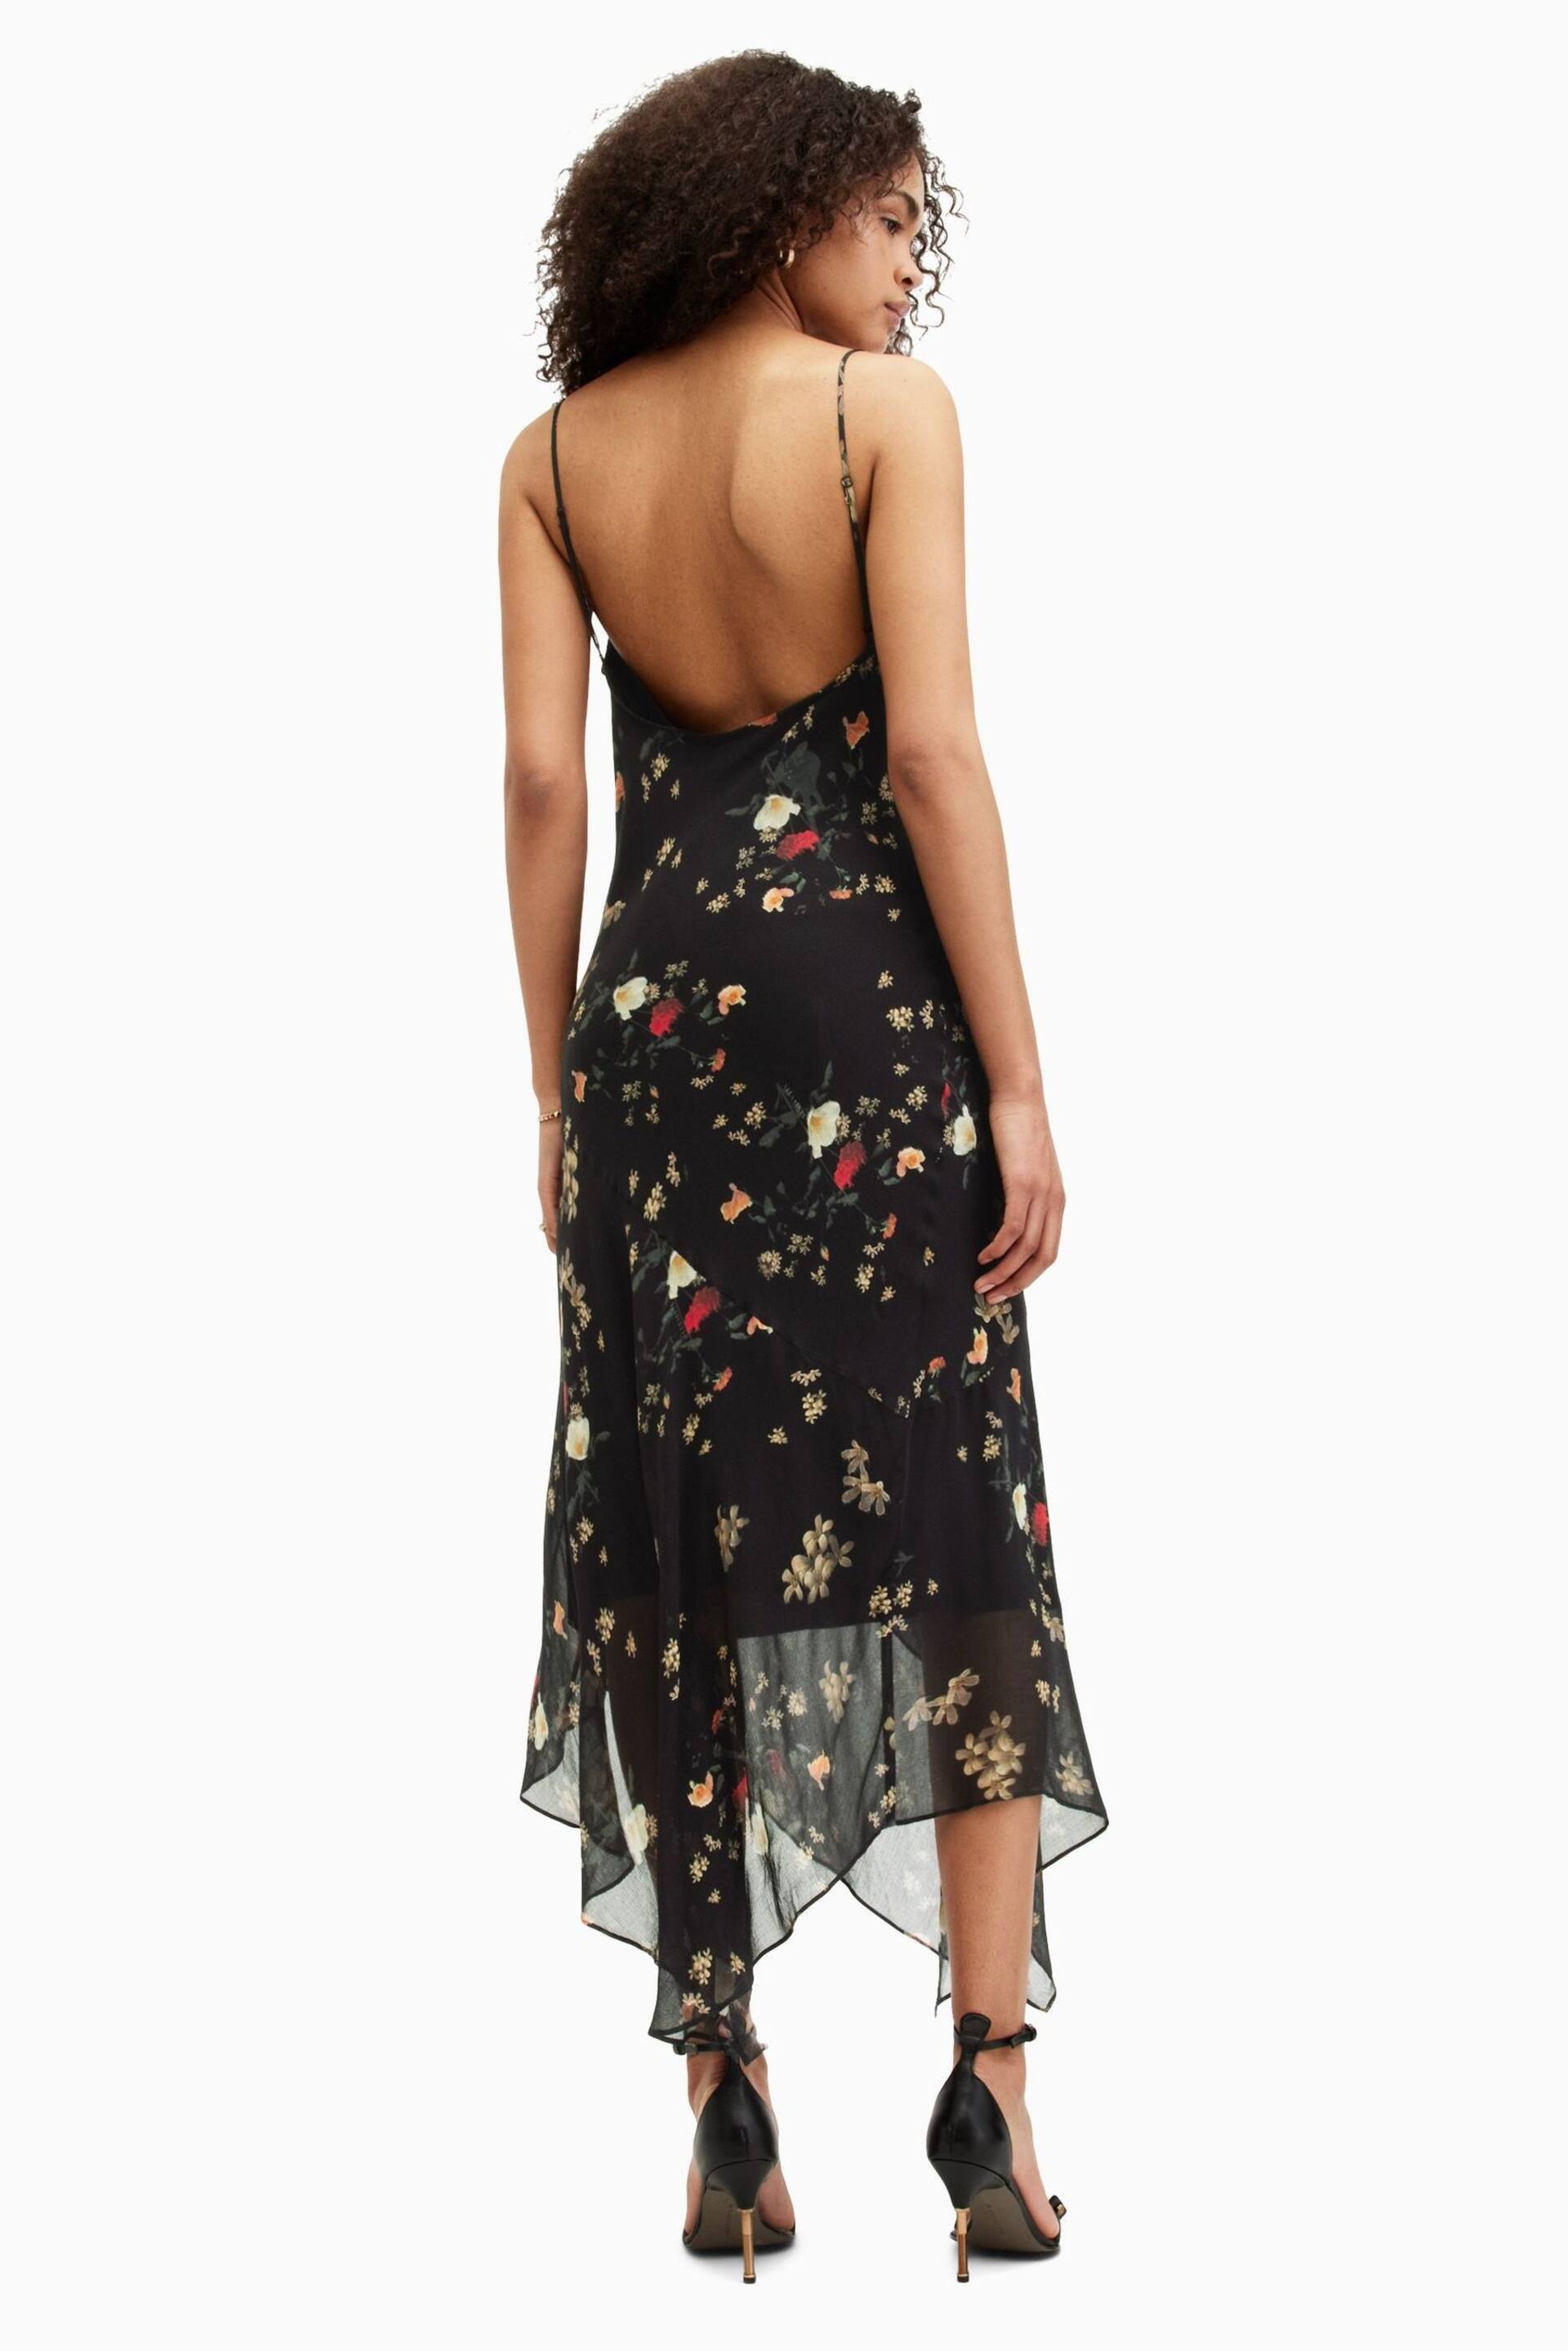 AllSaints Black Charlotte Kora Dress - Image 5 of 7